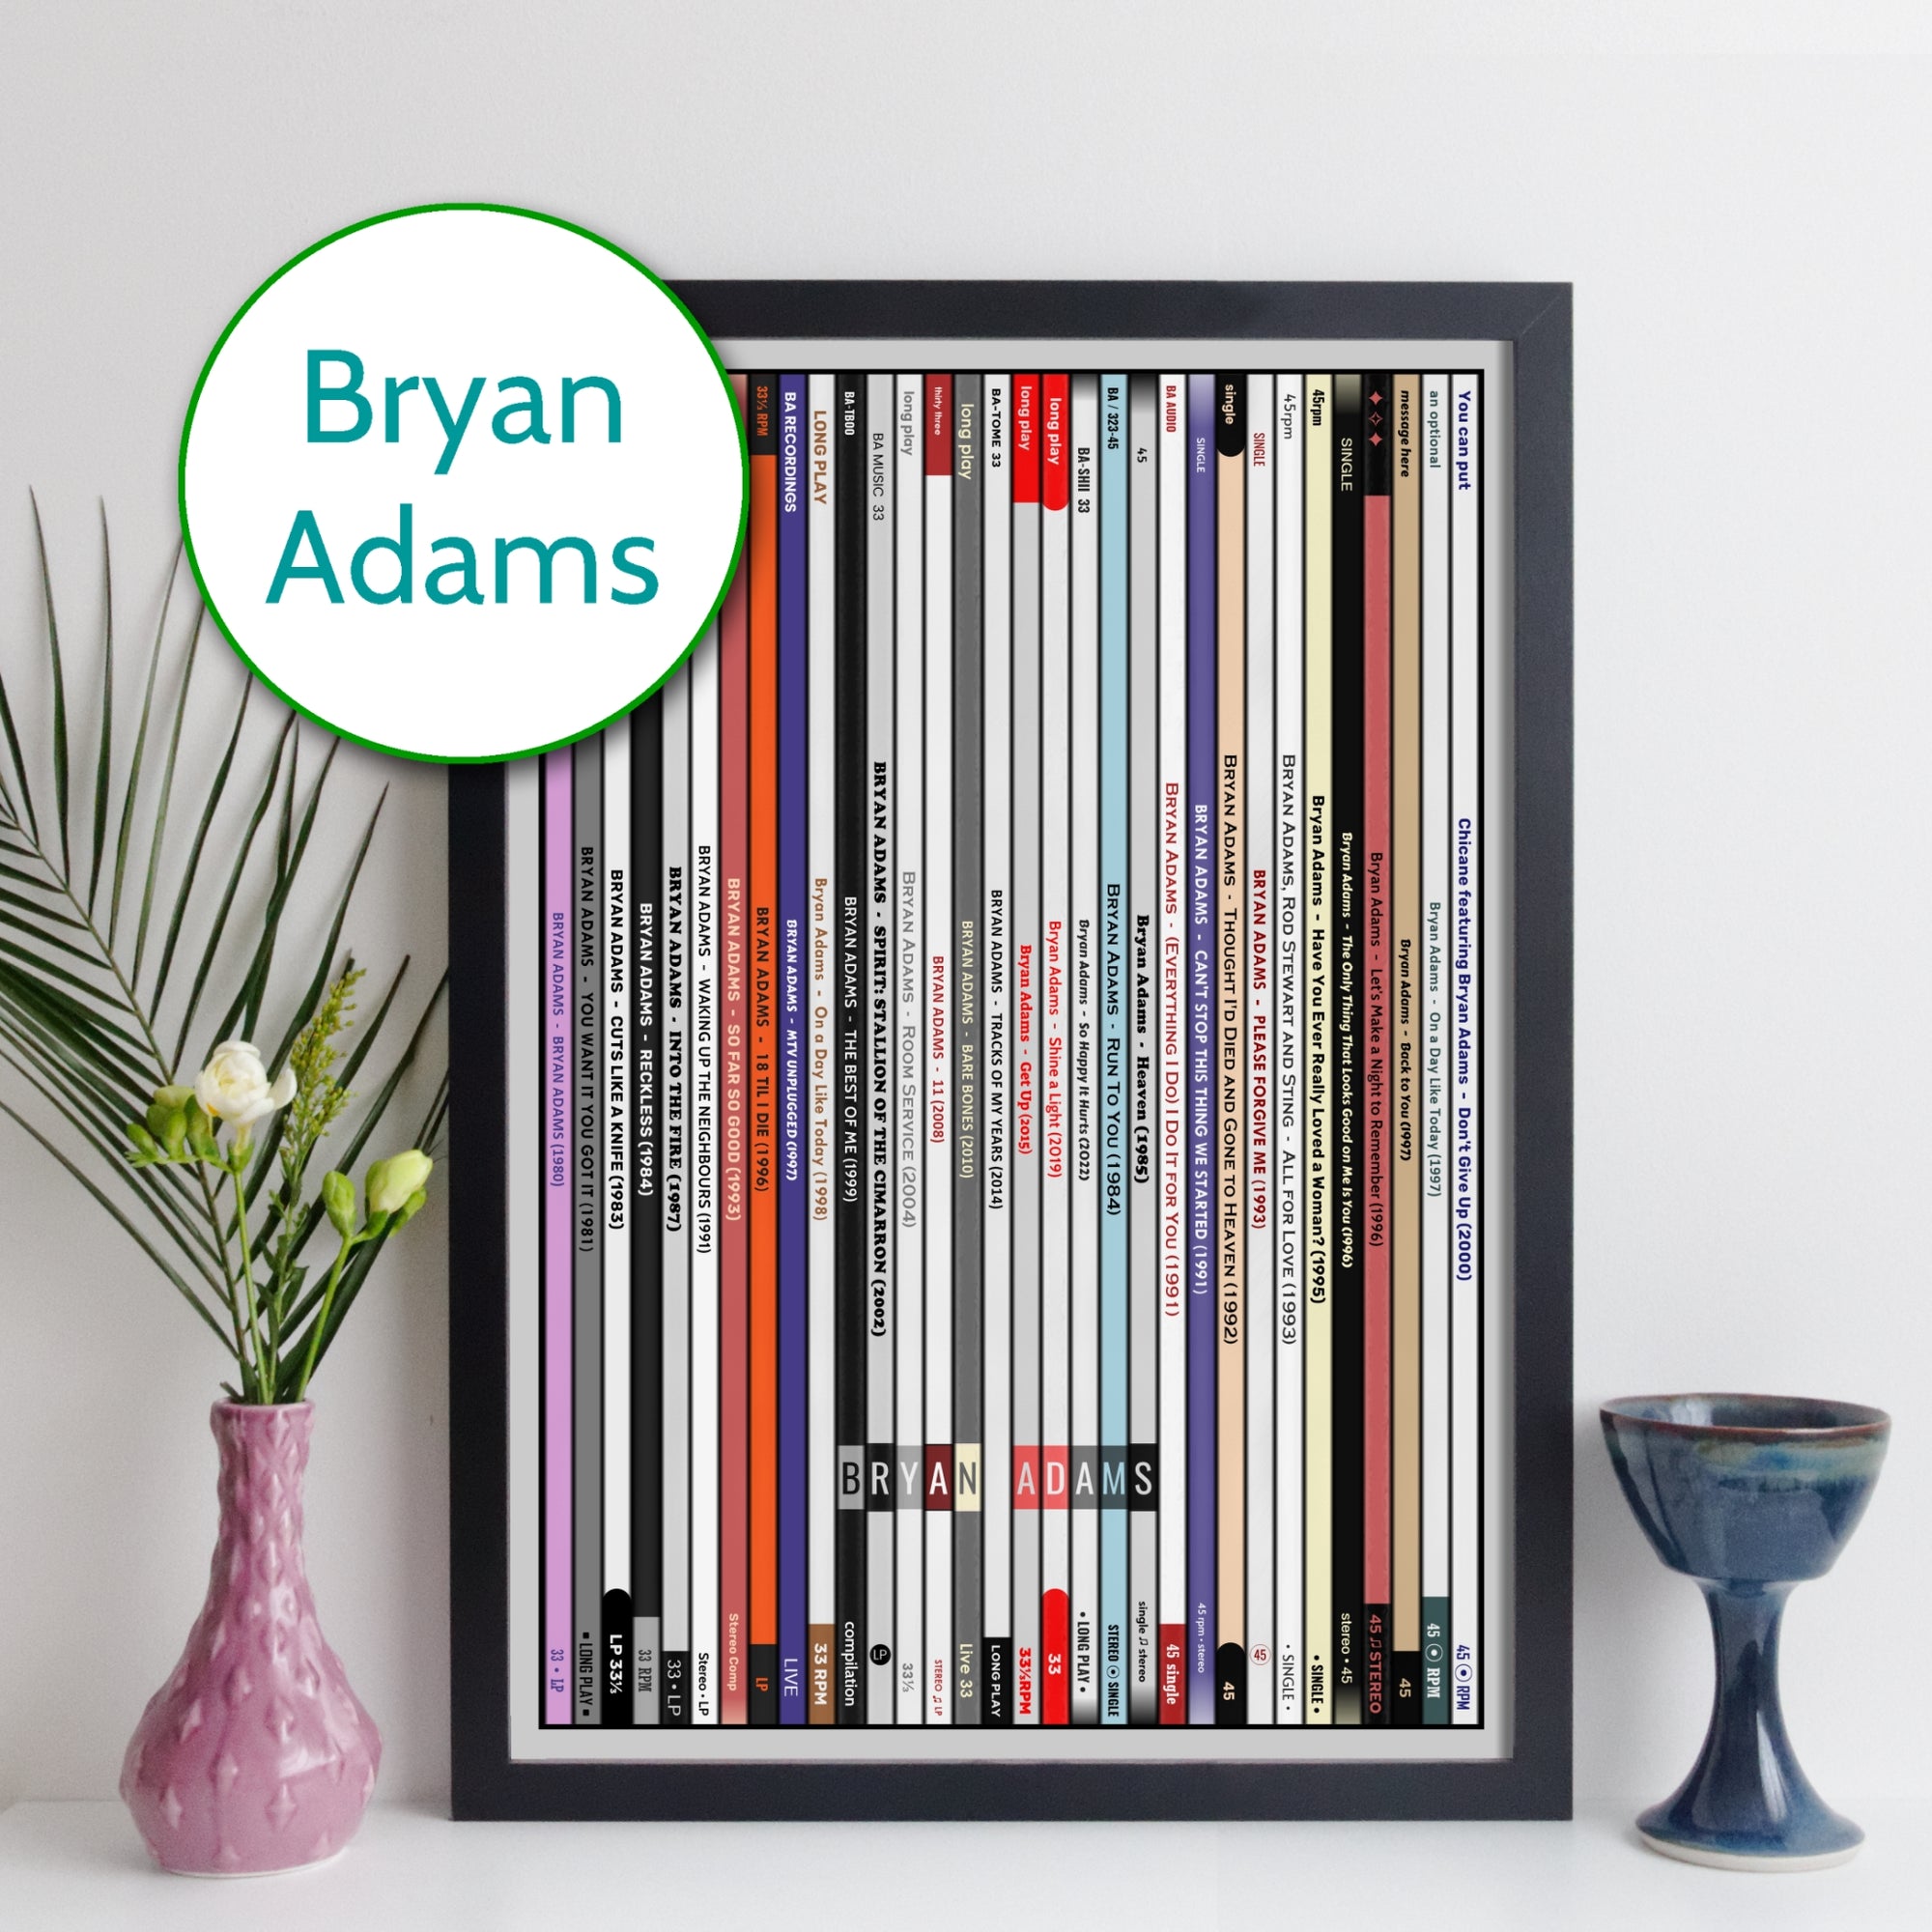 Bryan Adams Discography Print